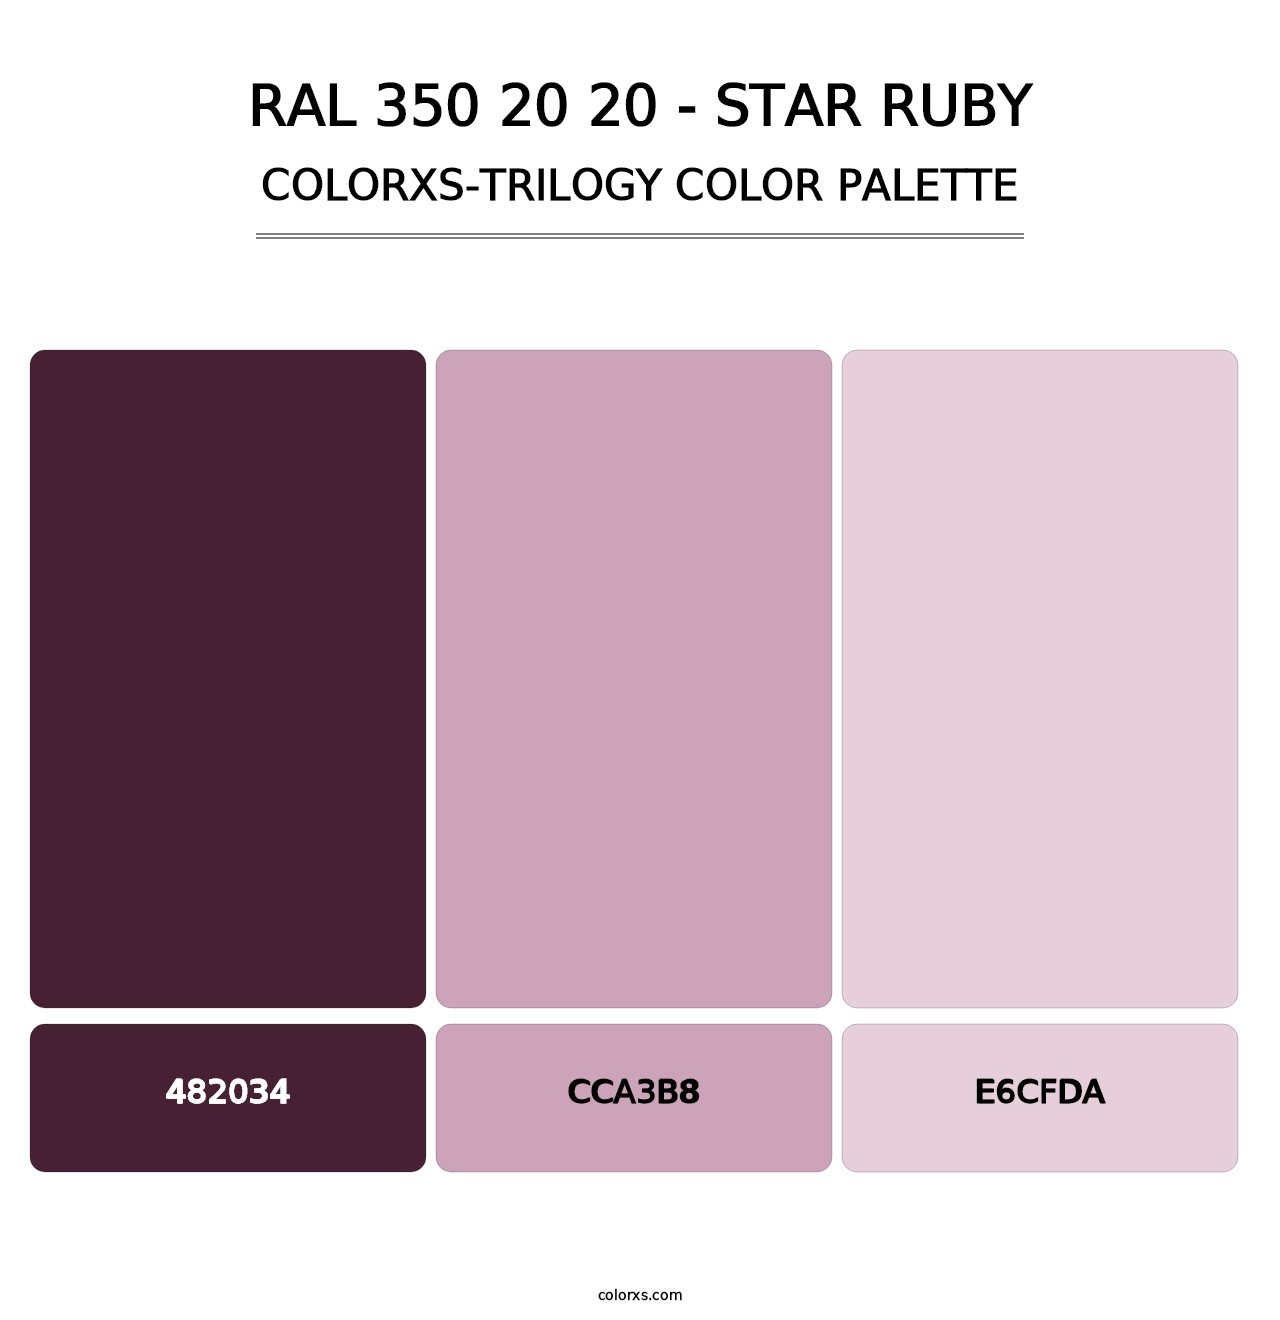 RAL 350 20 20 - Star Ruby - Colorxs Trilogy Palette